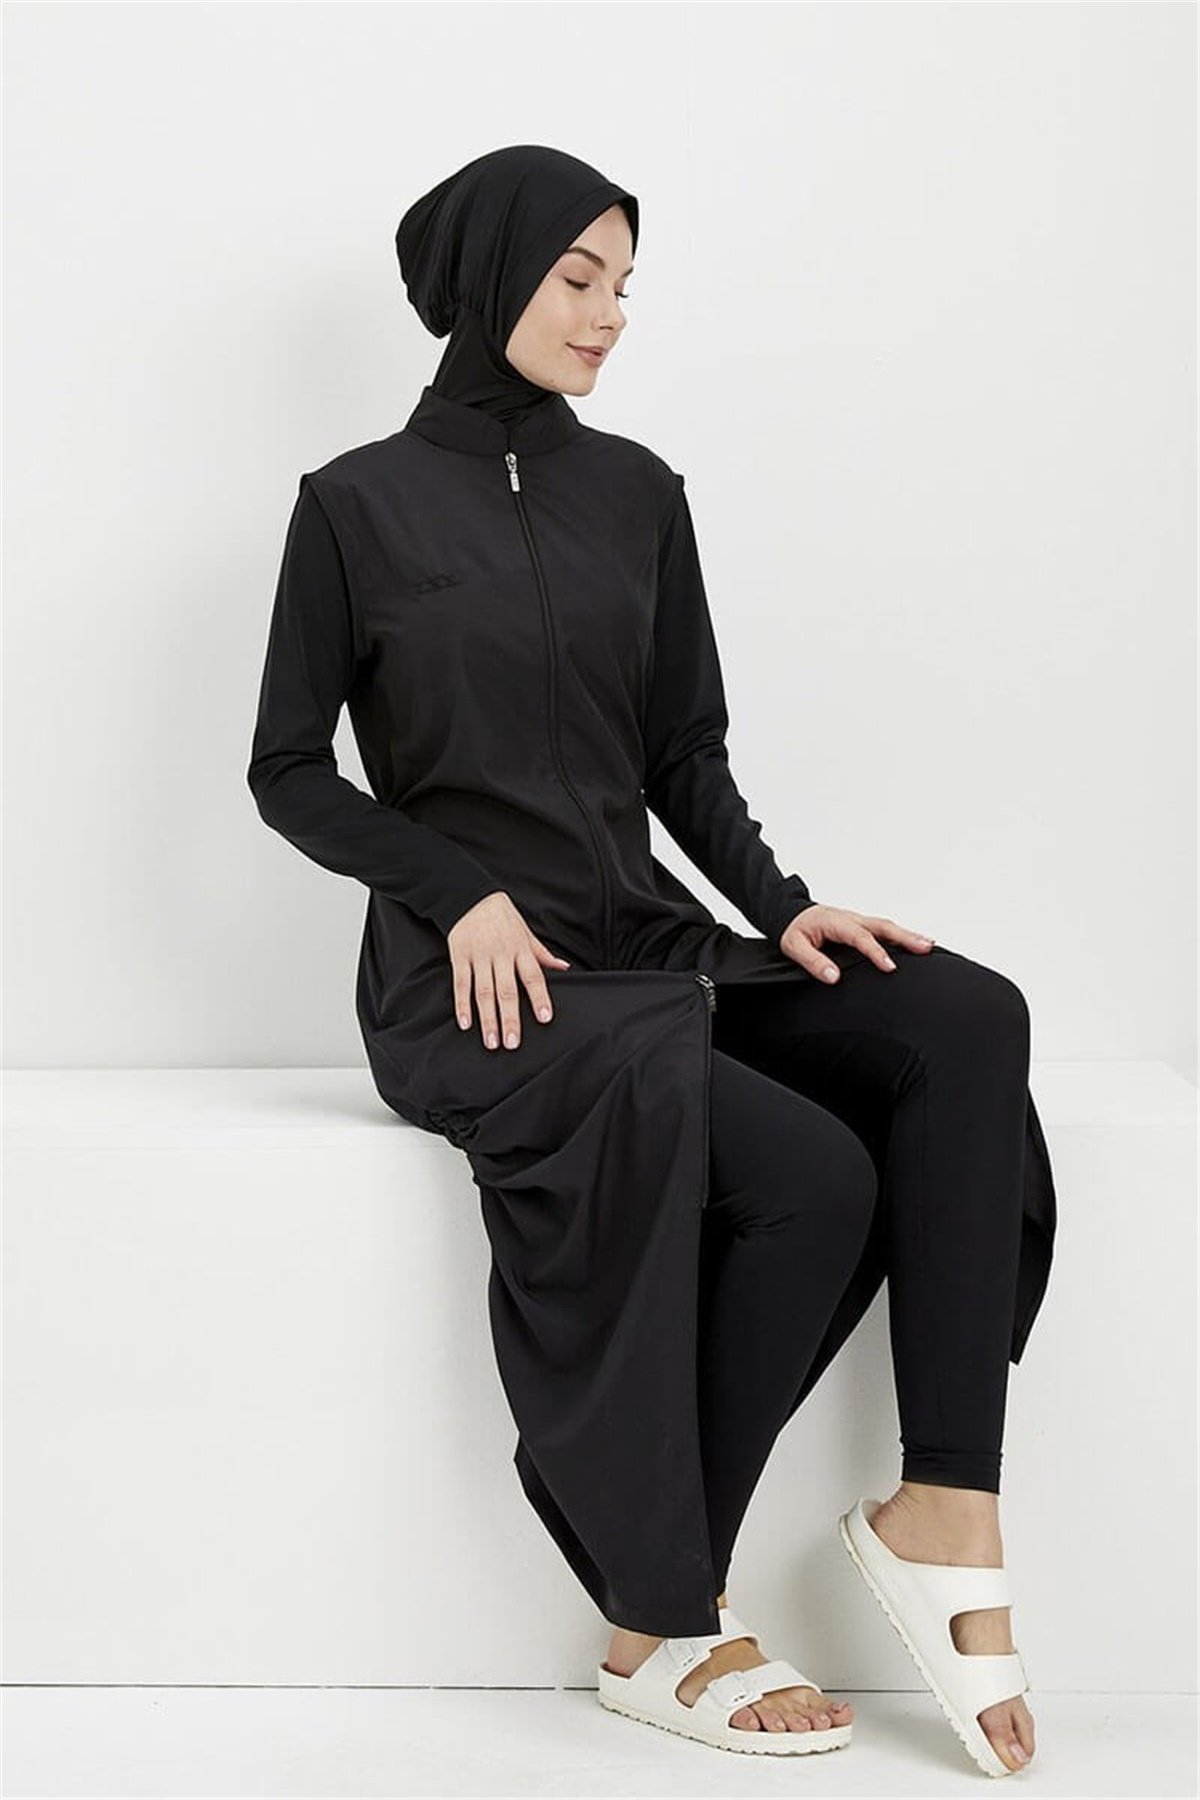 Hasema 6021-132, Long and Black Full Hijab Hasema Sine